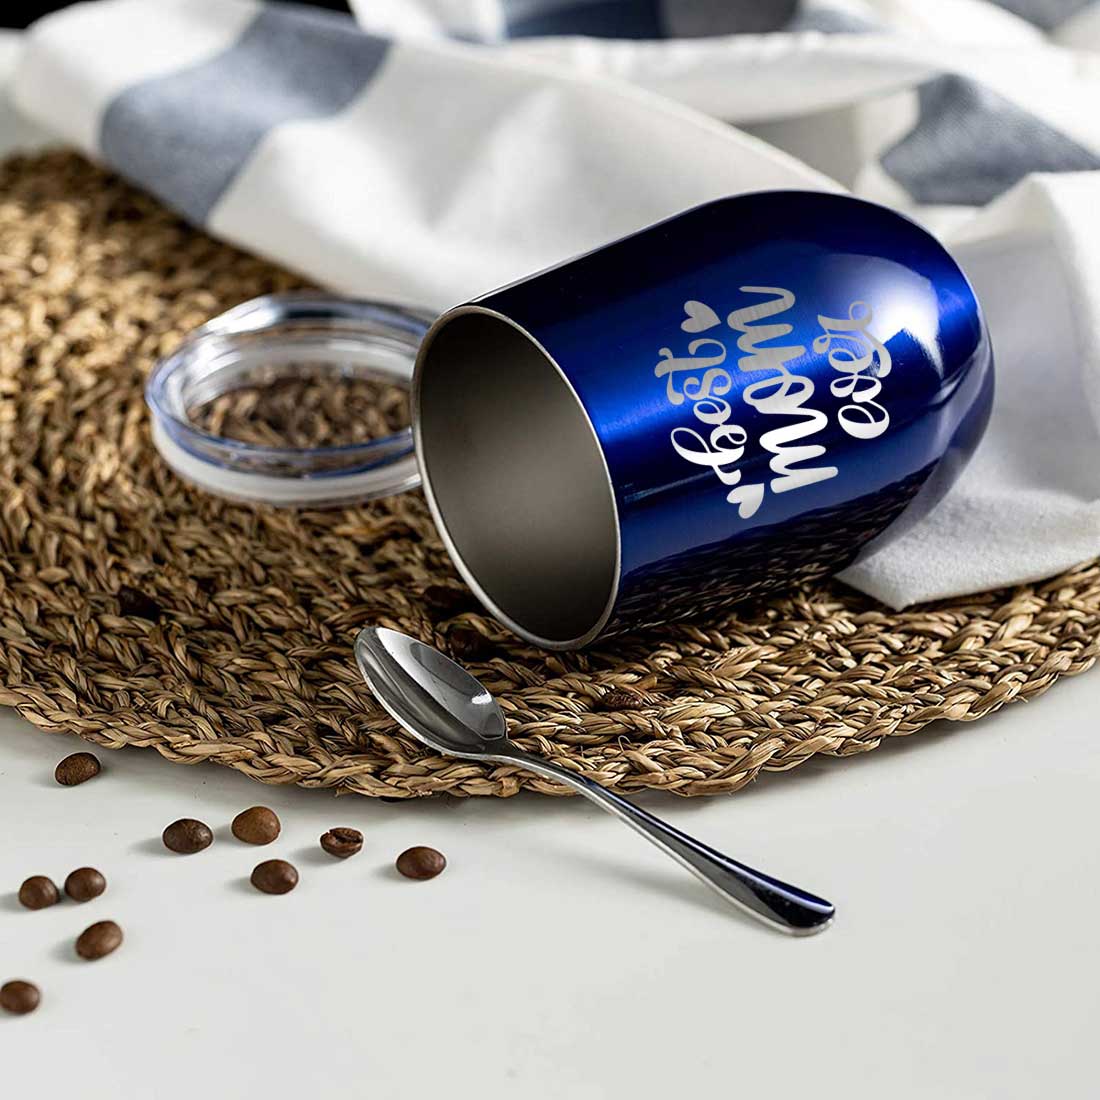 20 Oz Thermos Personalized Thermos Coffee Lovers Dad Mugs Mom Mugs Teacher  Gifts Nurse Gifts-mug Gifts Mr&mrs Mug Sets FREE SHIPPING 